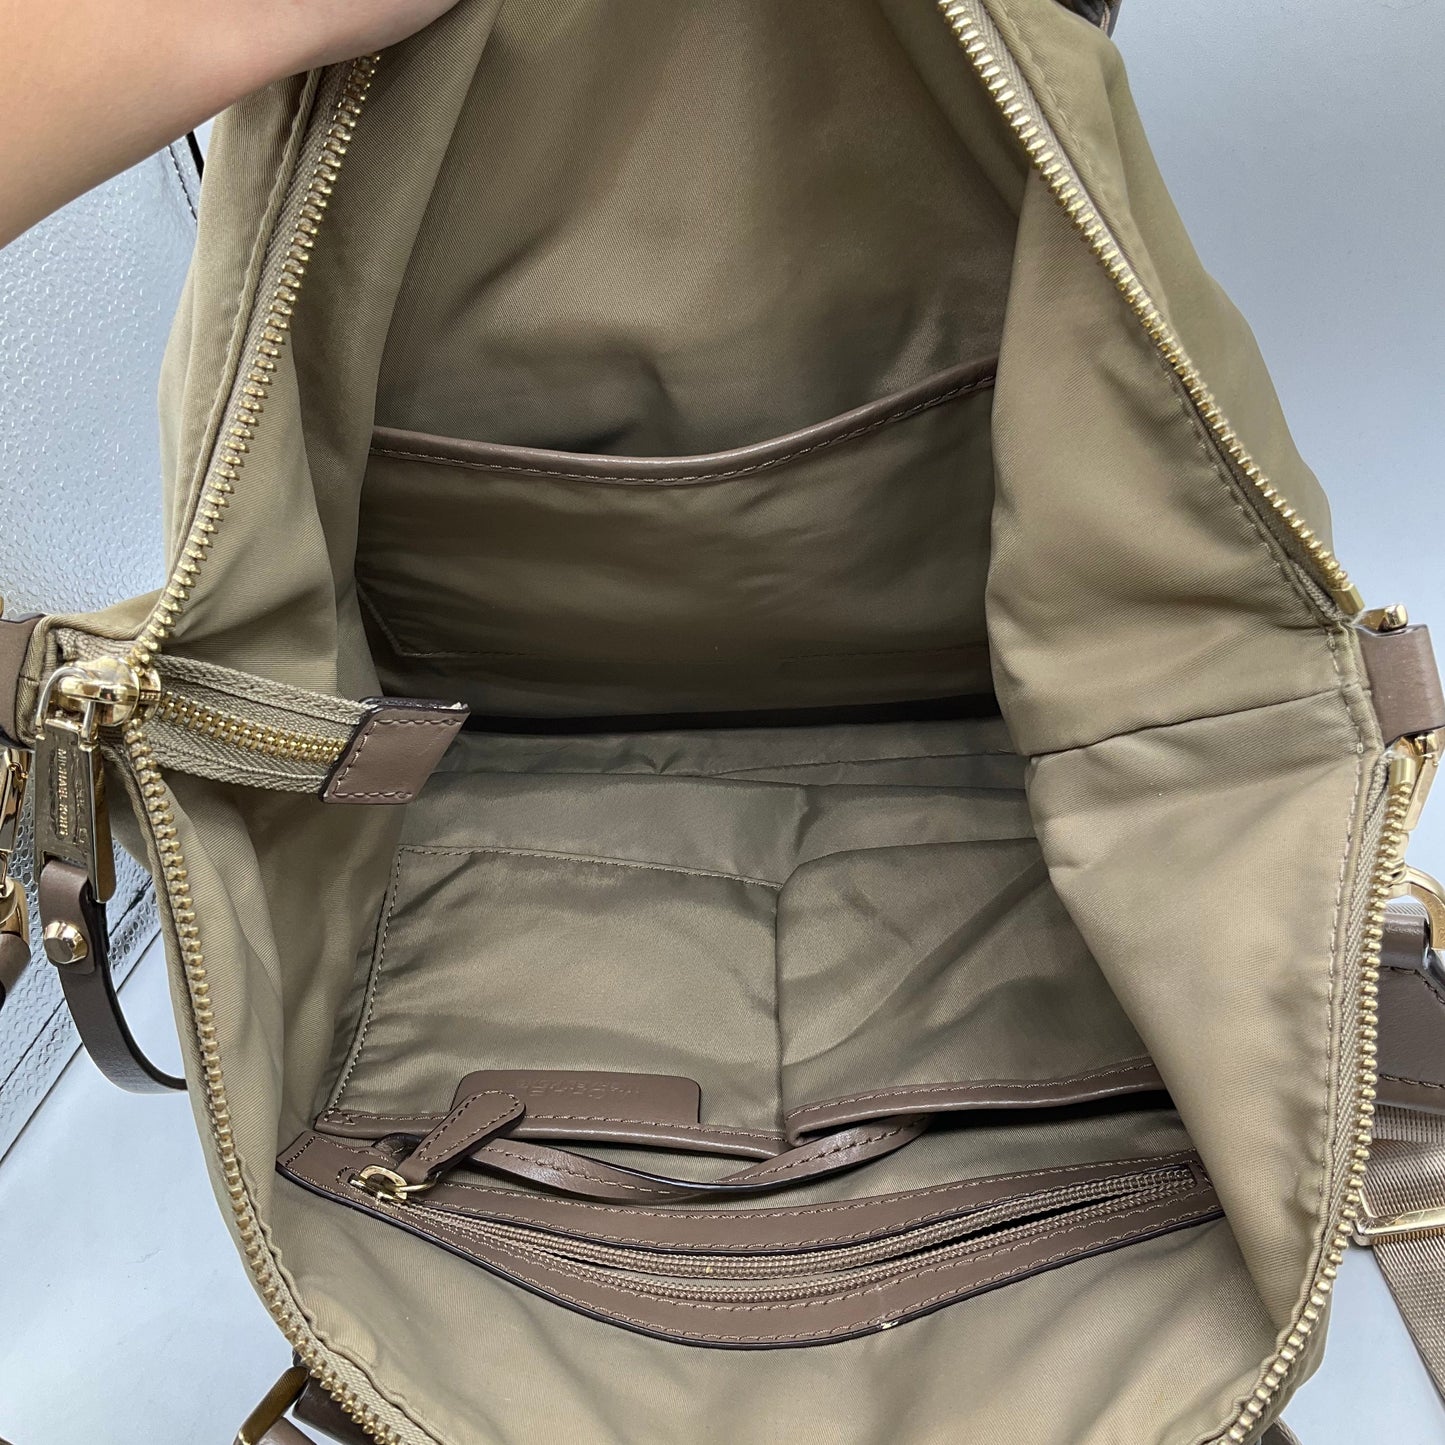 Backpack Designer Michael By Michael Kors, Size Medium